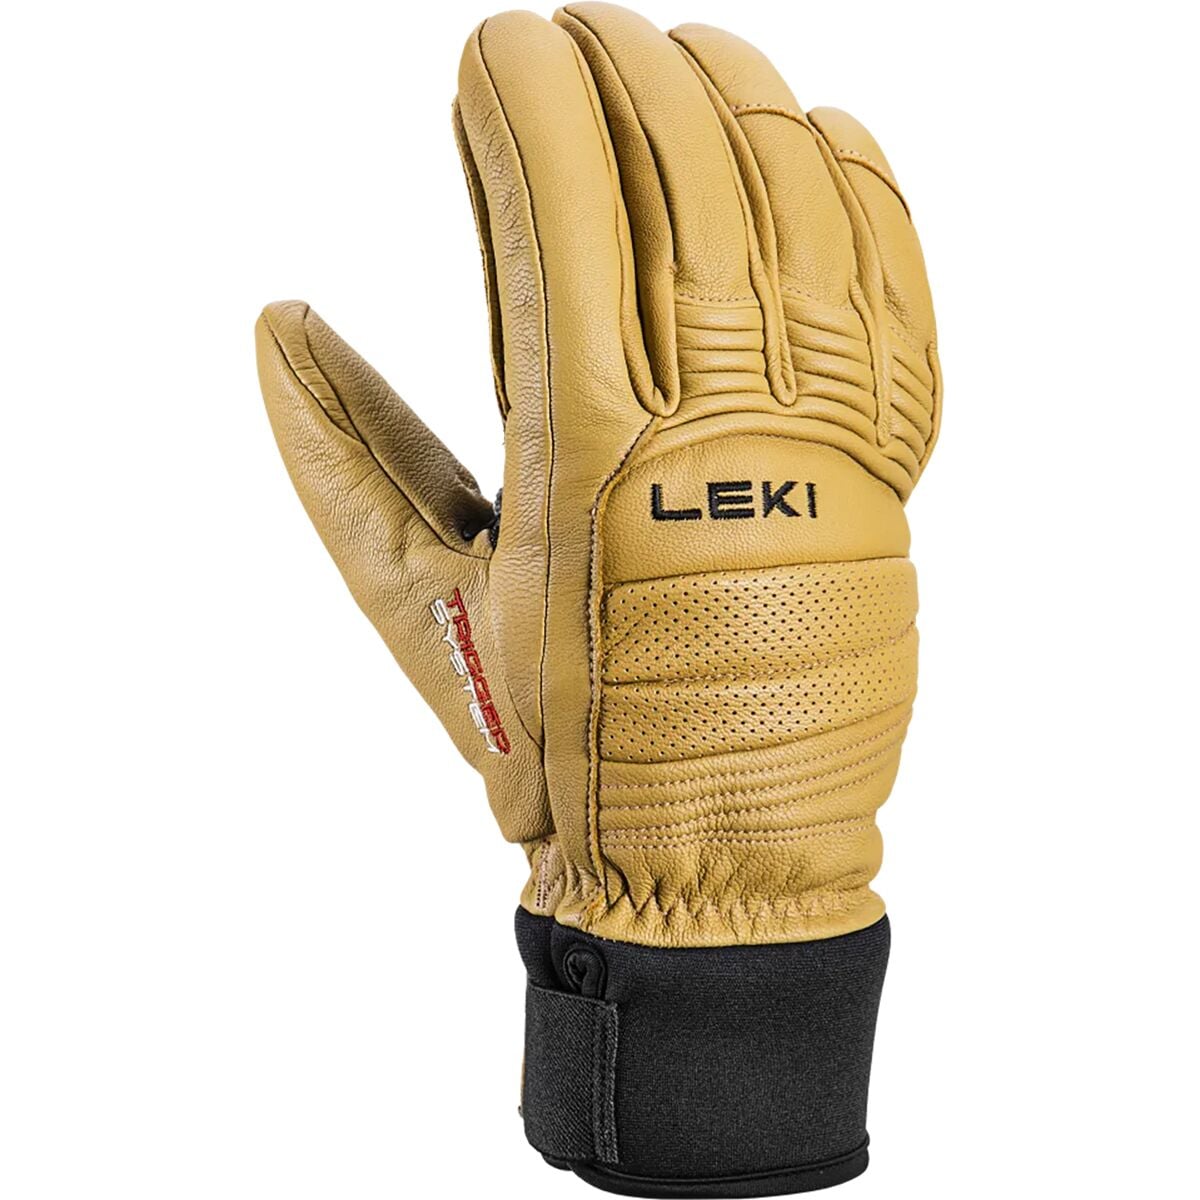 LEKI Copper 3D Pro Glove - Men's